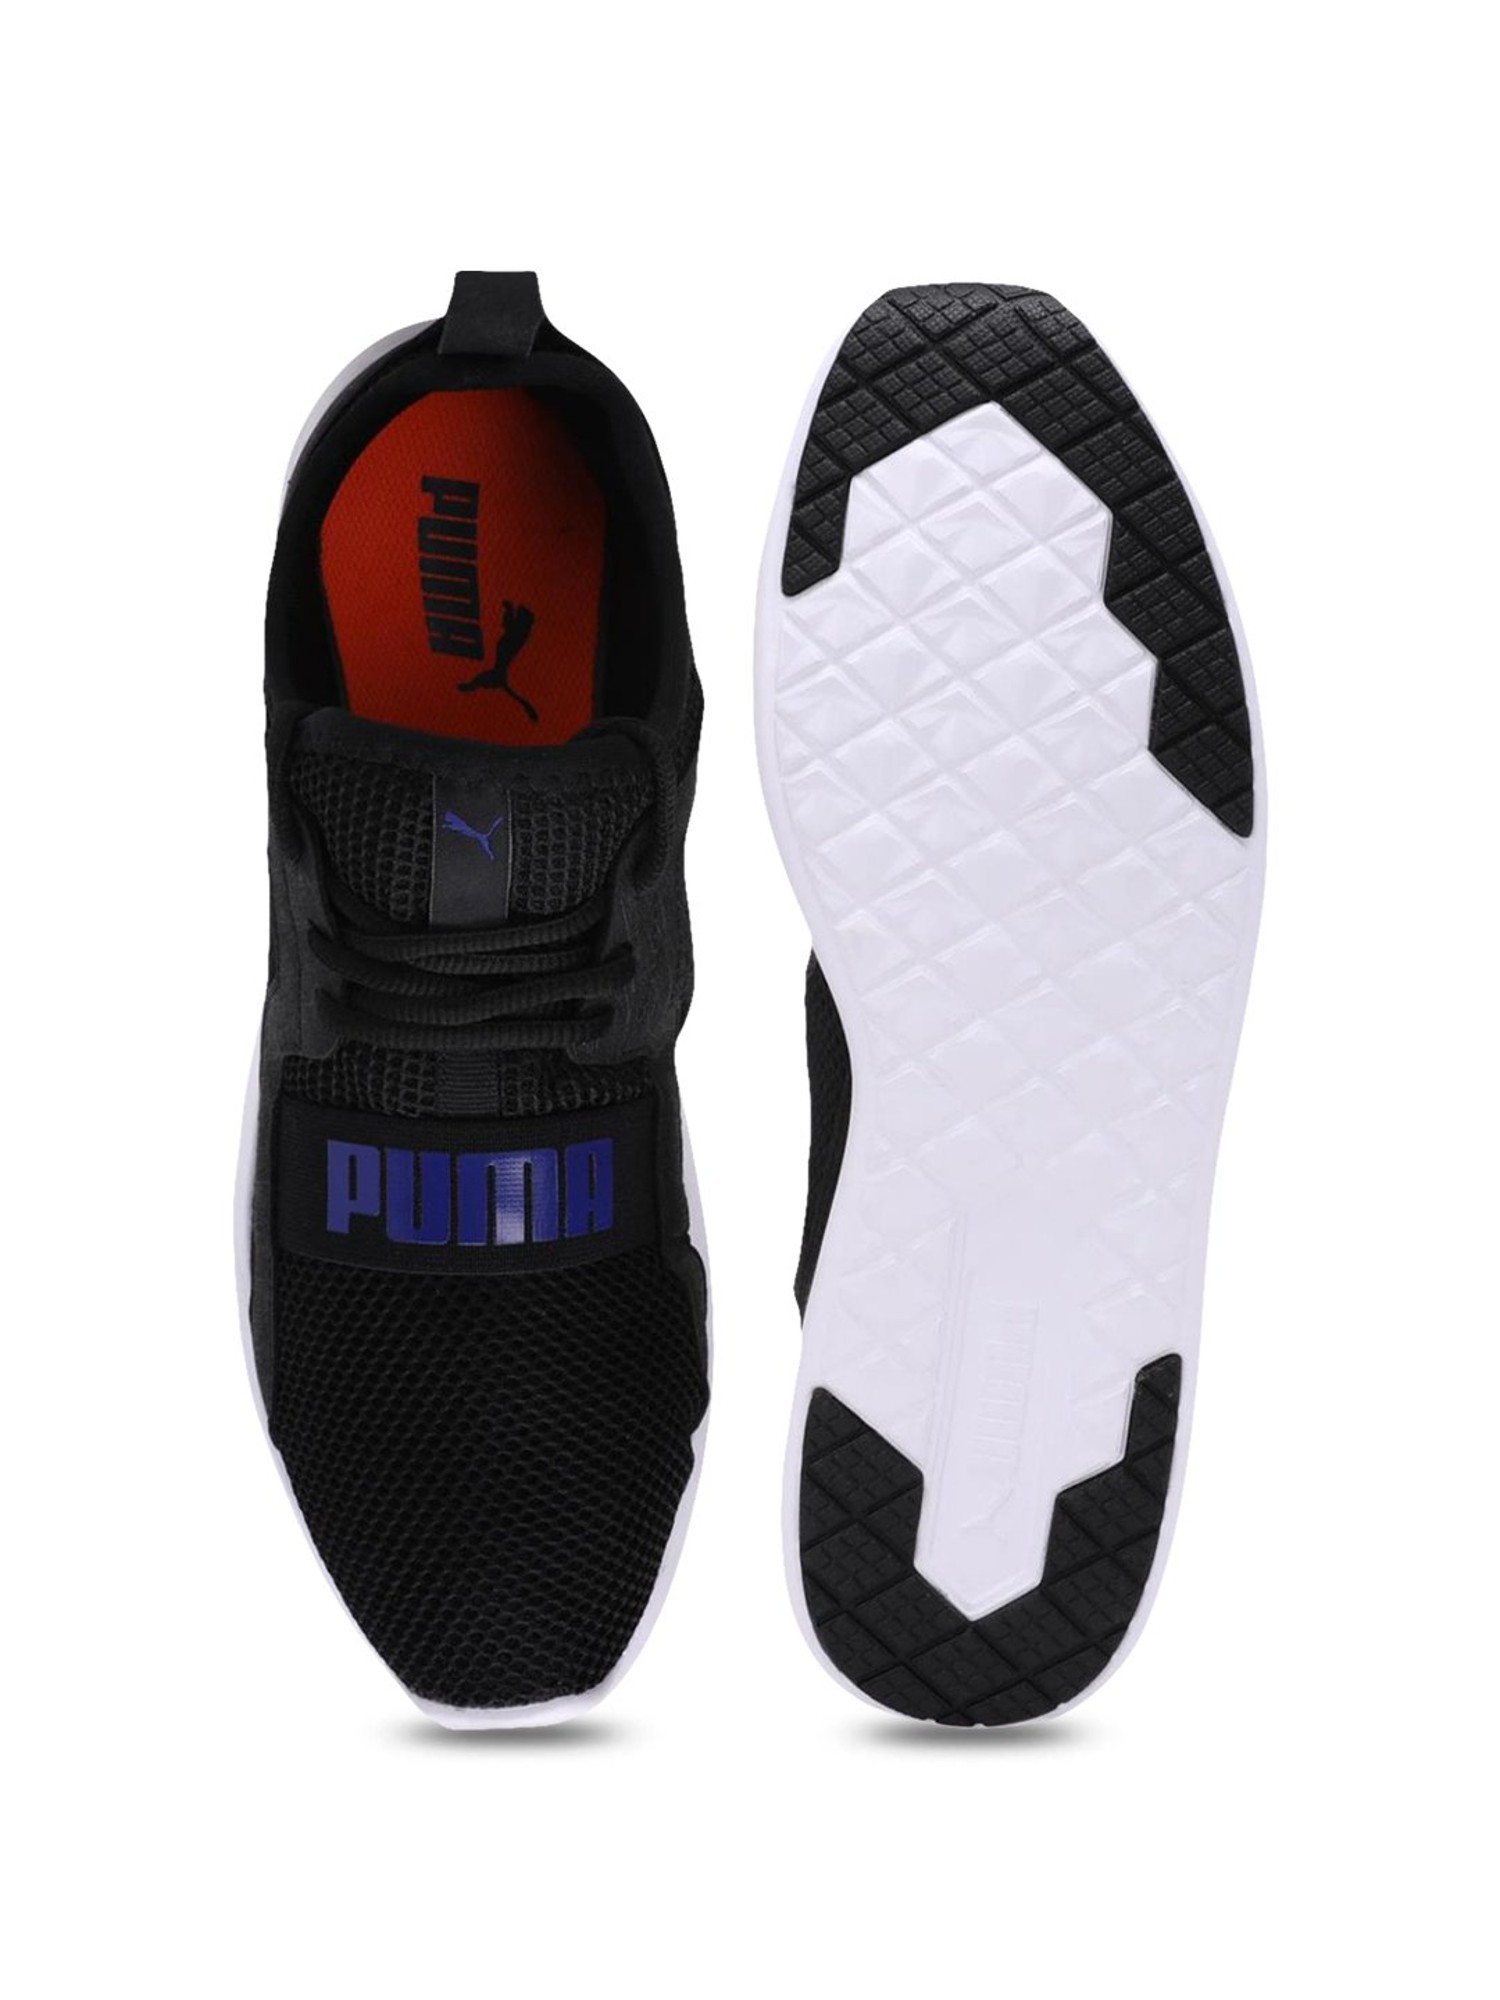 Buy Puma Abiko IDP Black Running Shoes 